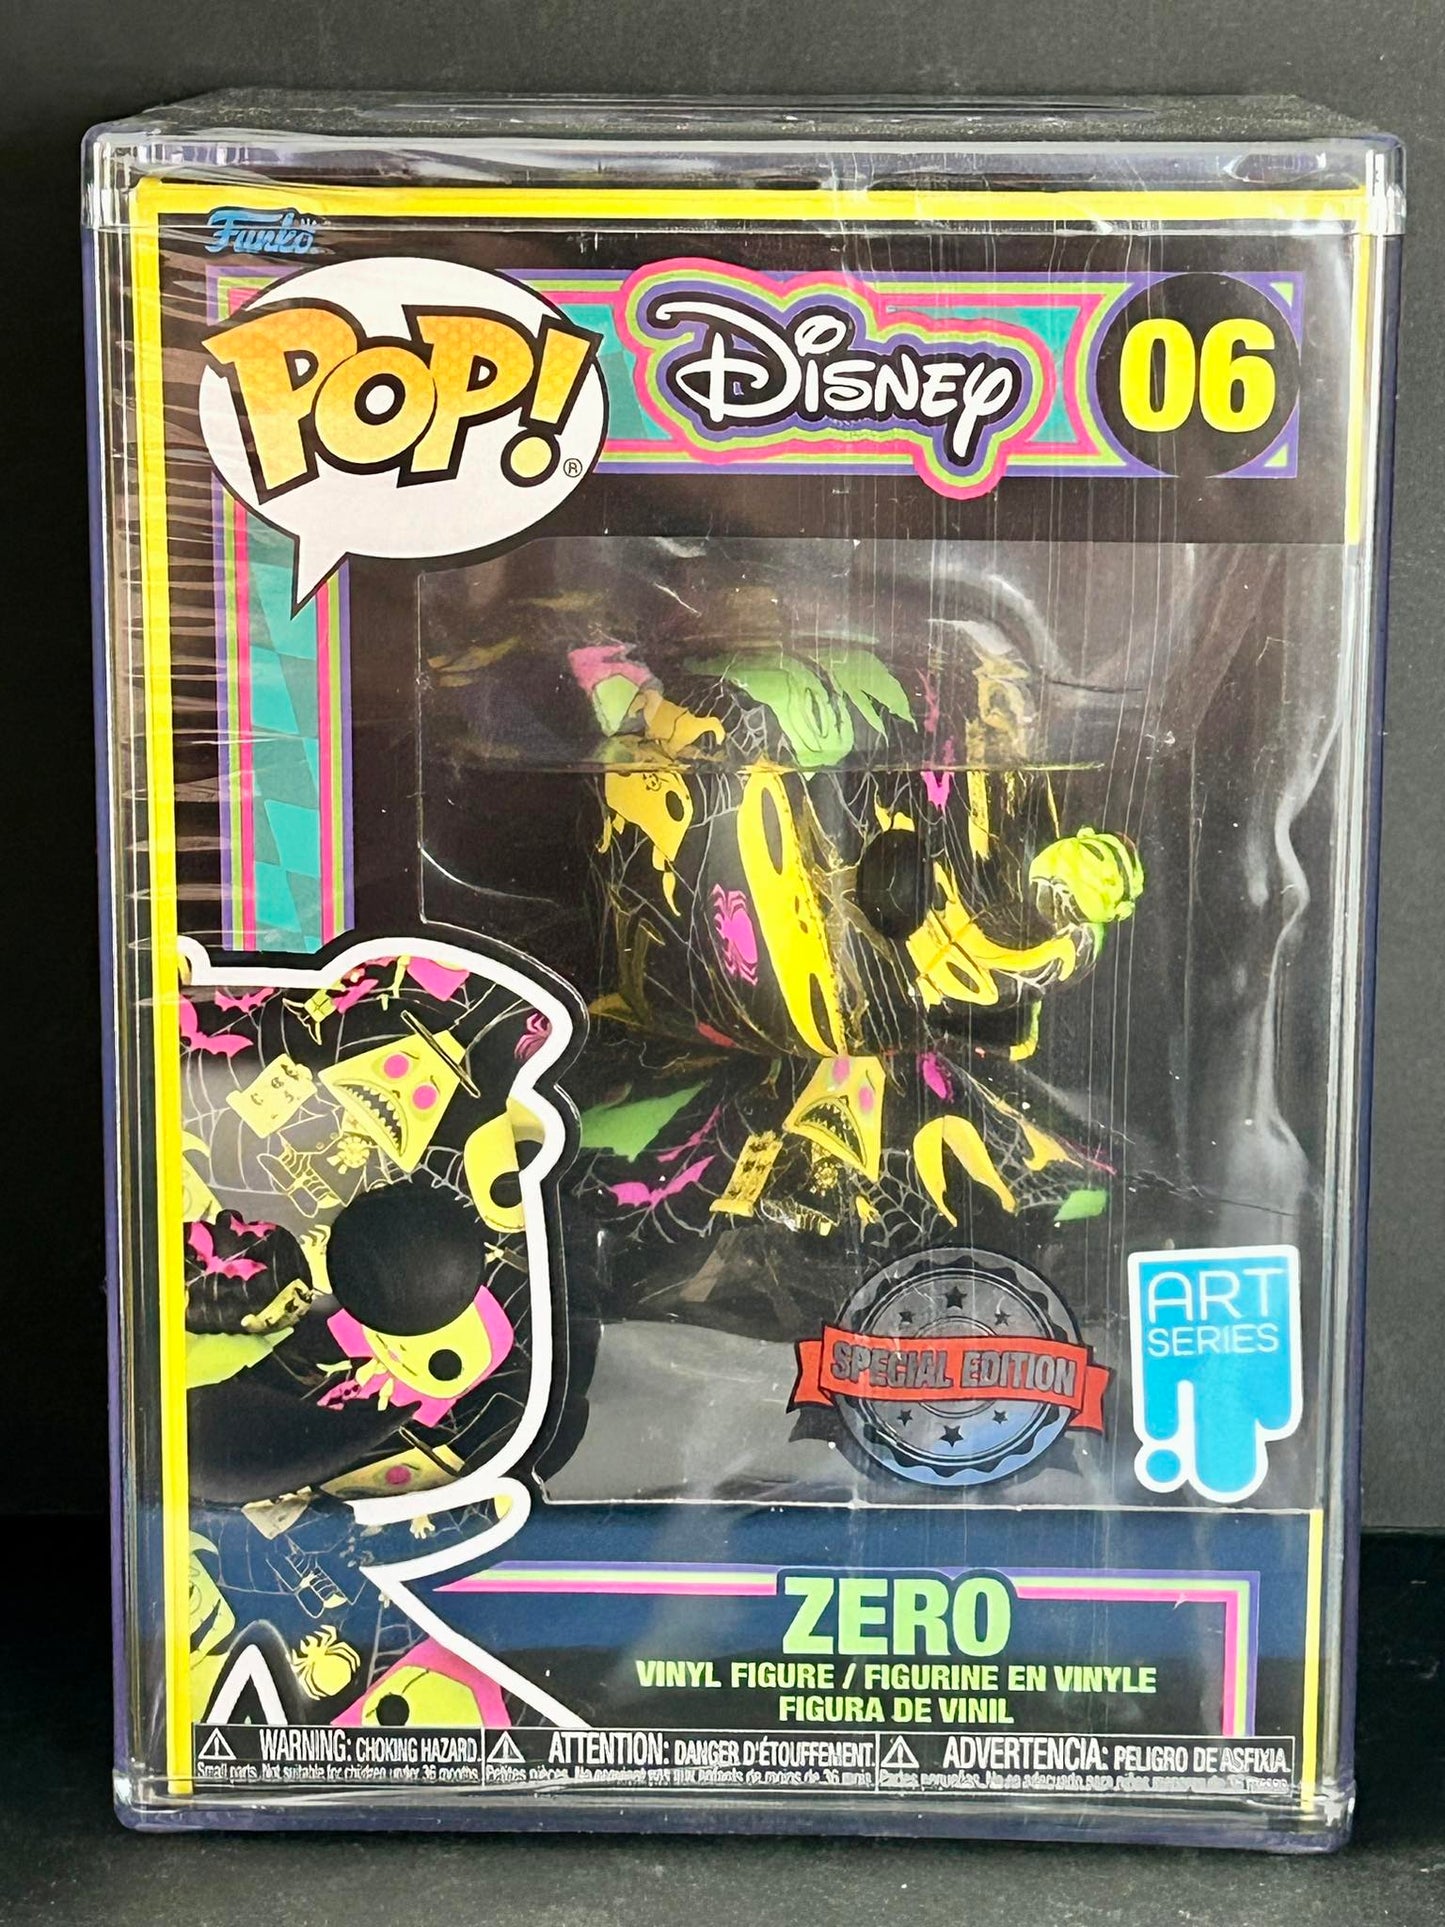 The Nightmare Before Christmas Pop Figure [Disney] #06 Zero Art Series + Box Pop Stacks